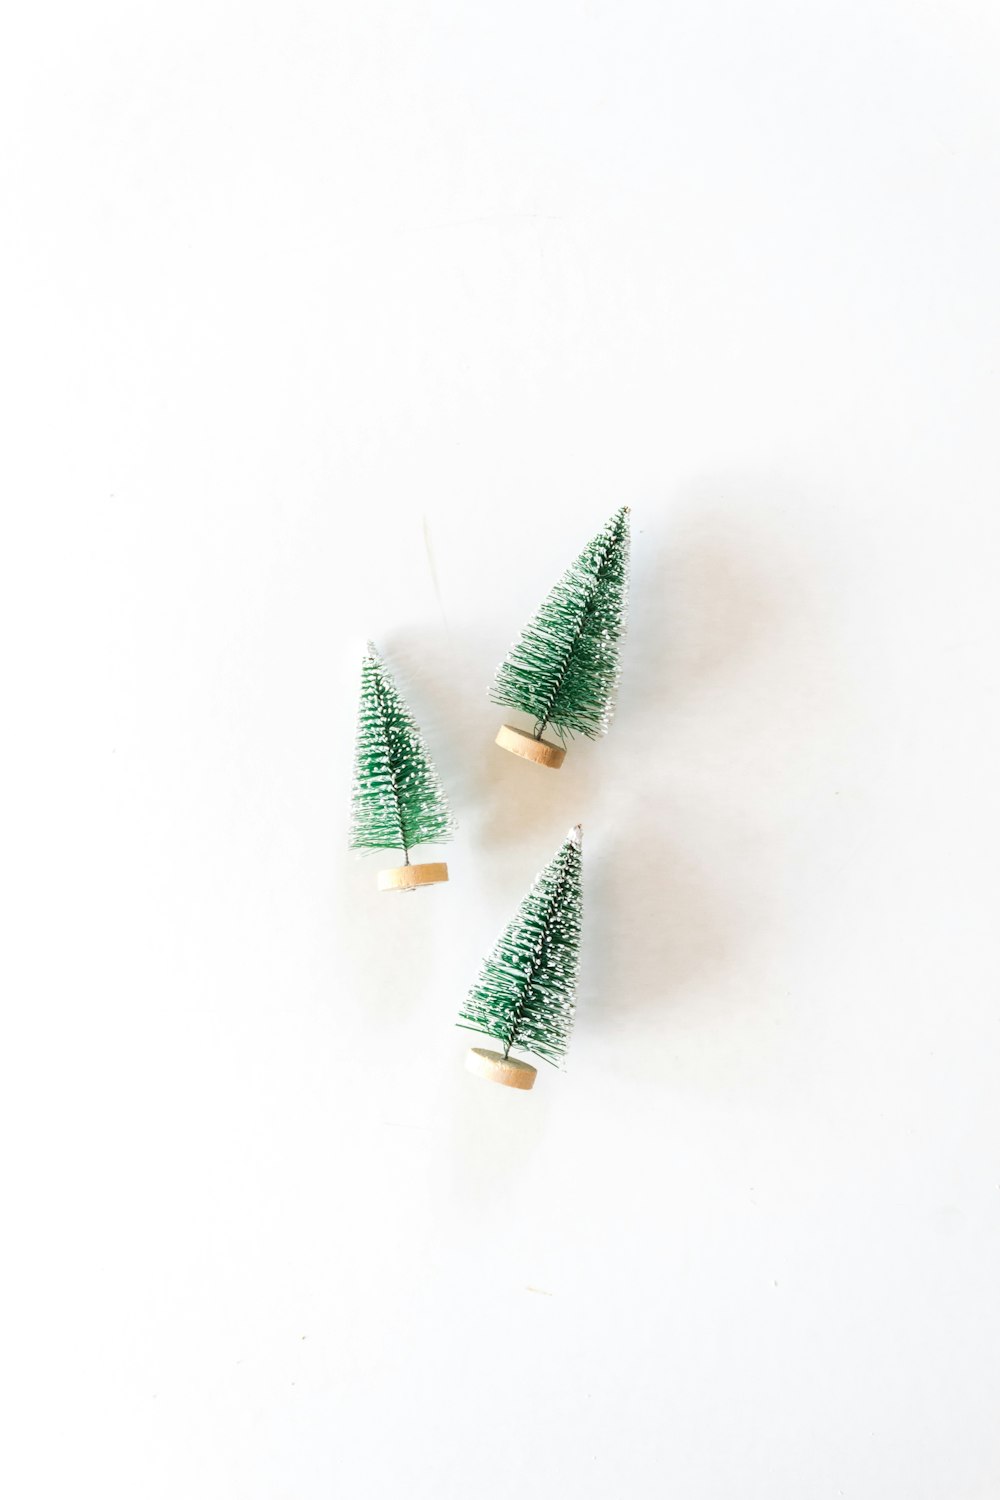 Tres miniaturas de pino sobre superficie blanca